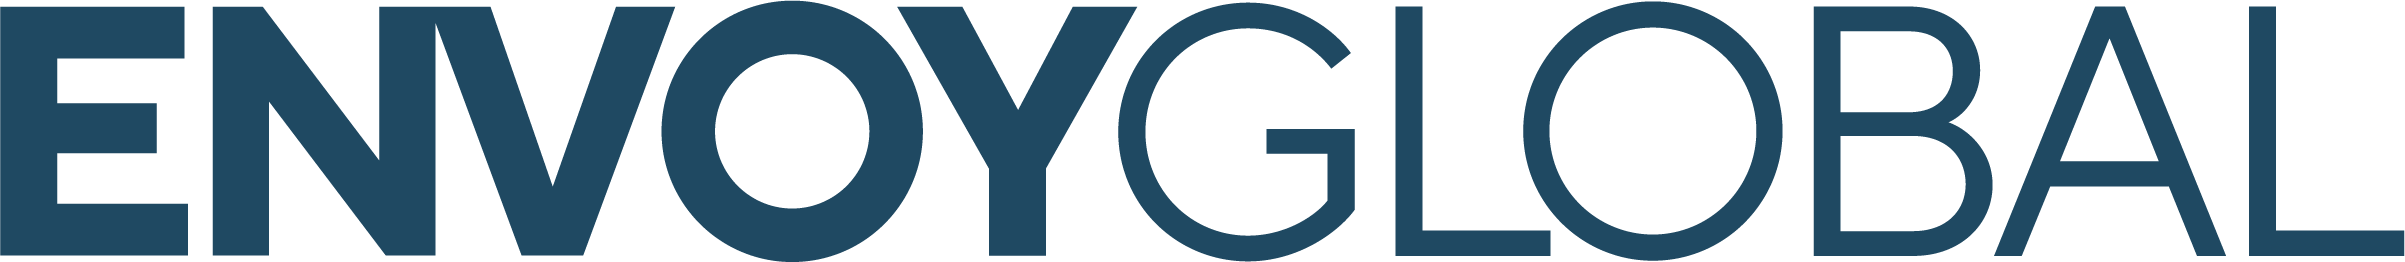 eg_logo